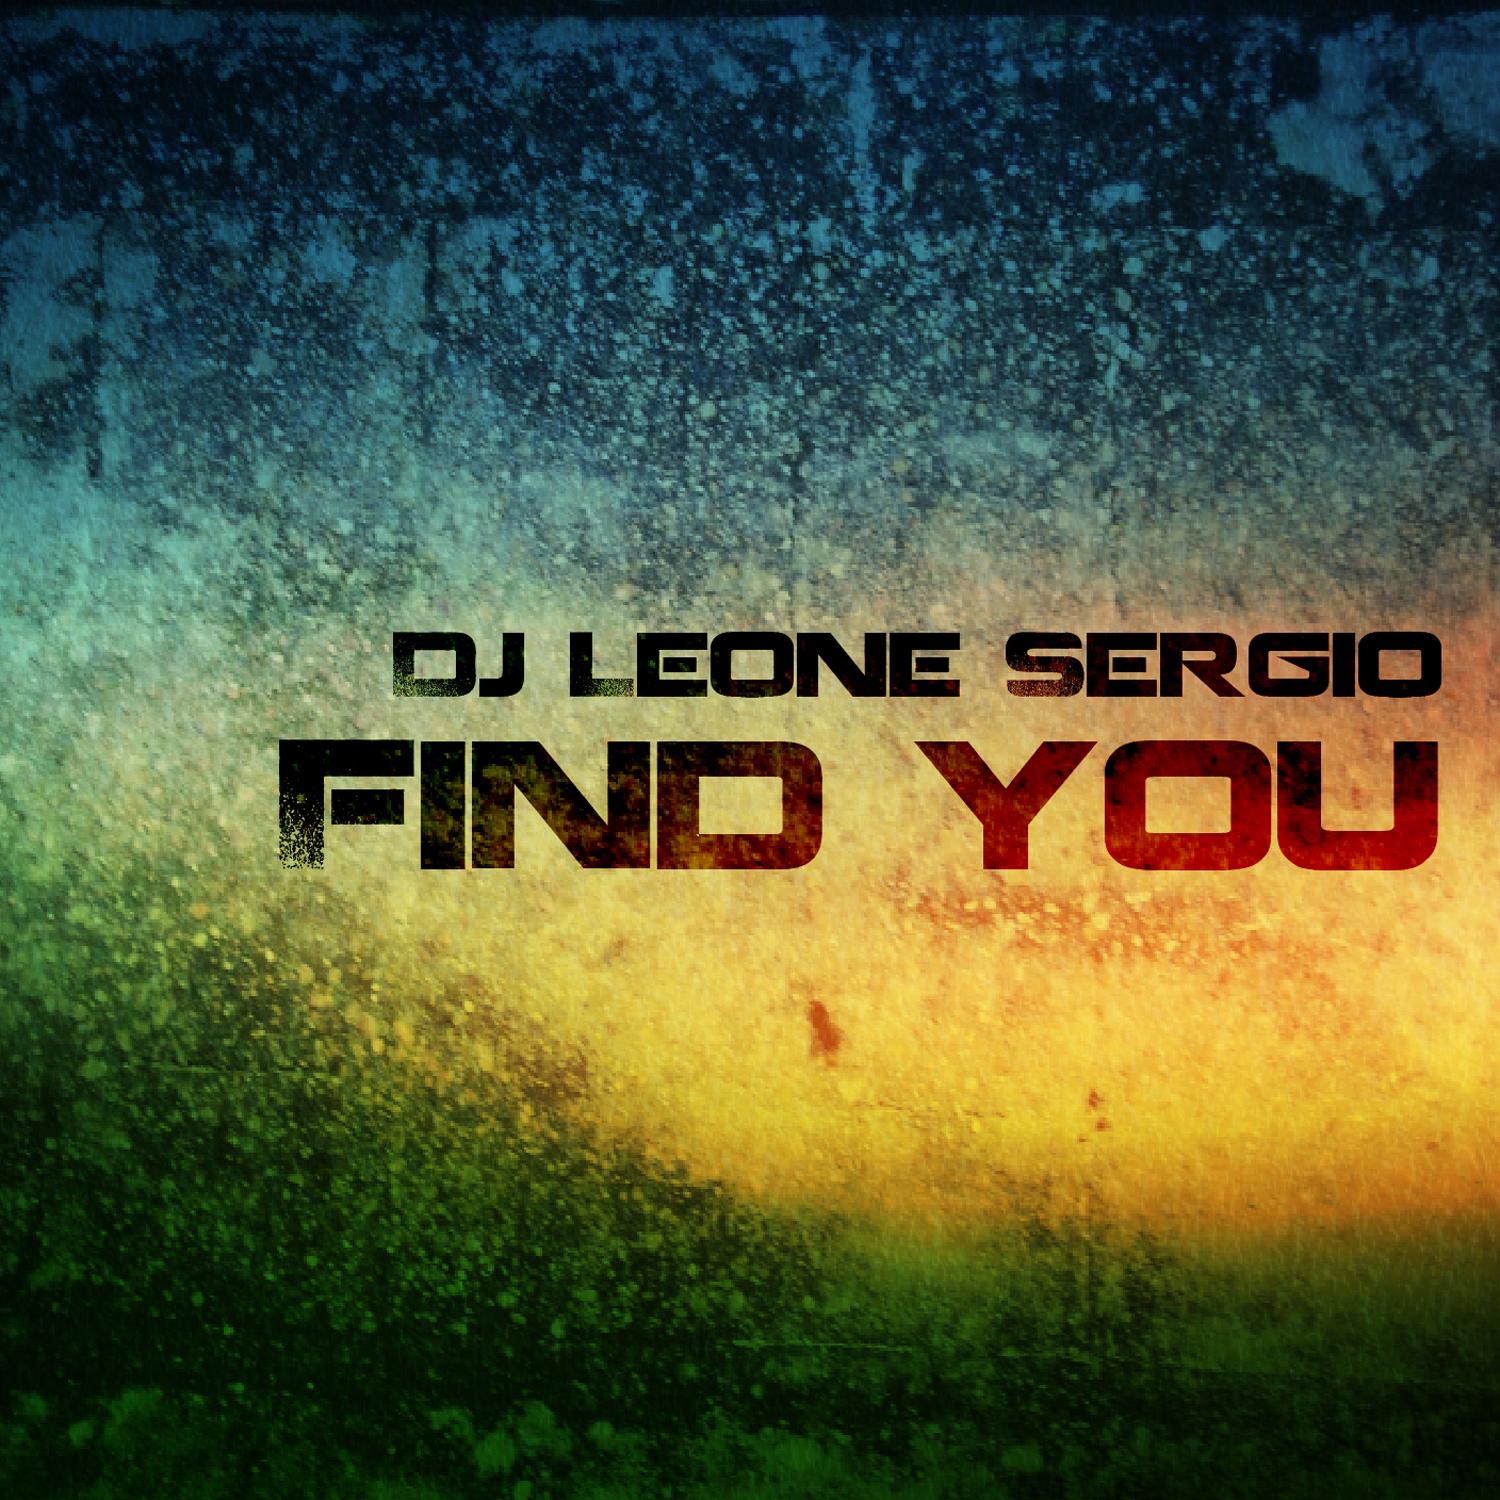 Find You (Alternative Version)